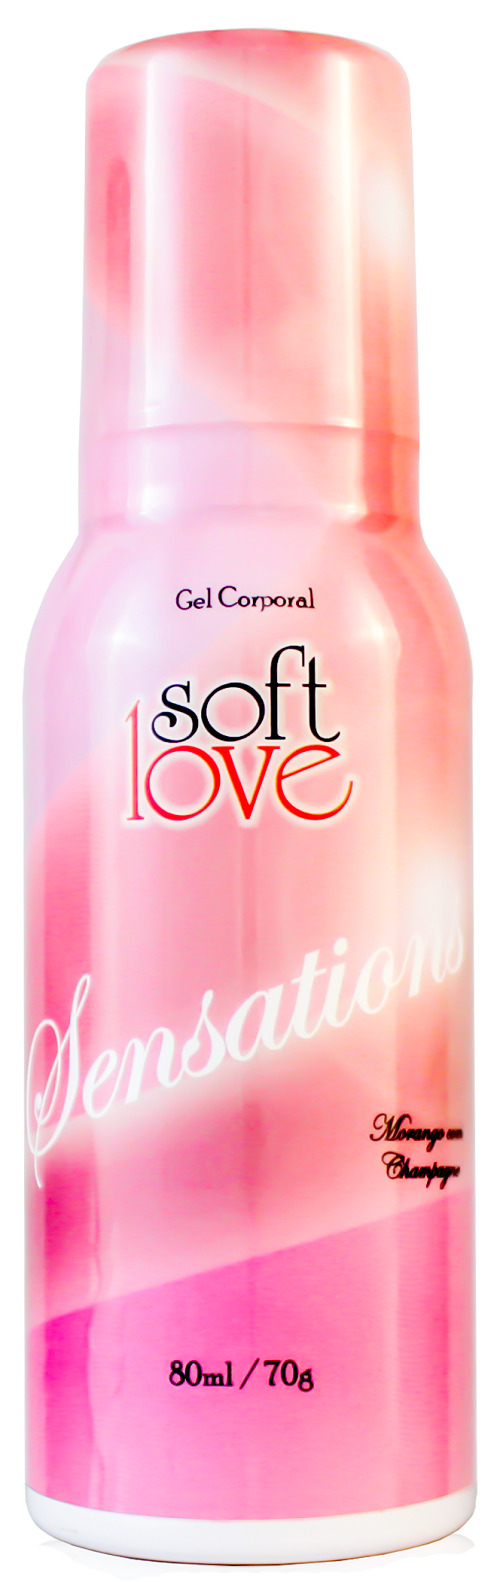 Sensations Morango Com Champagne 80ml/70g Soft Love